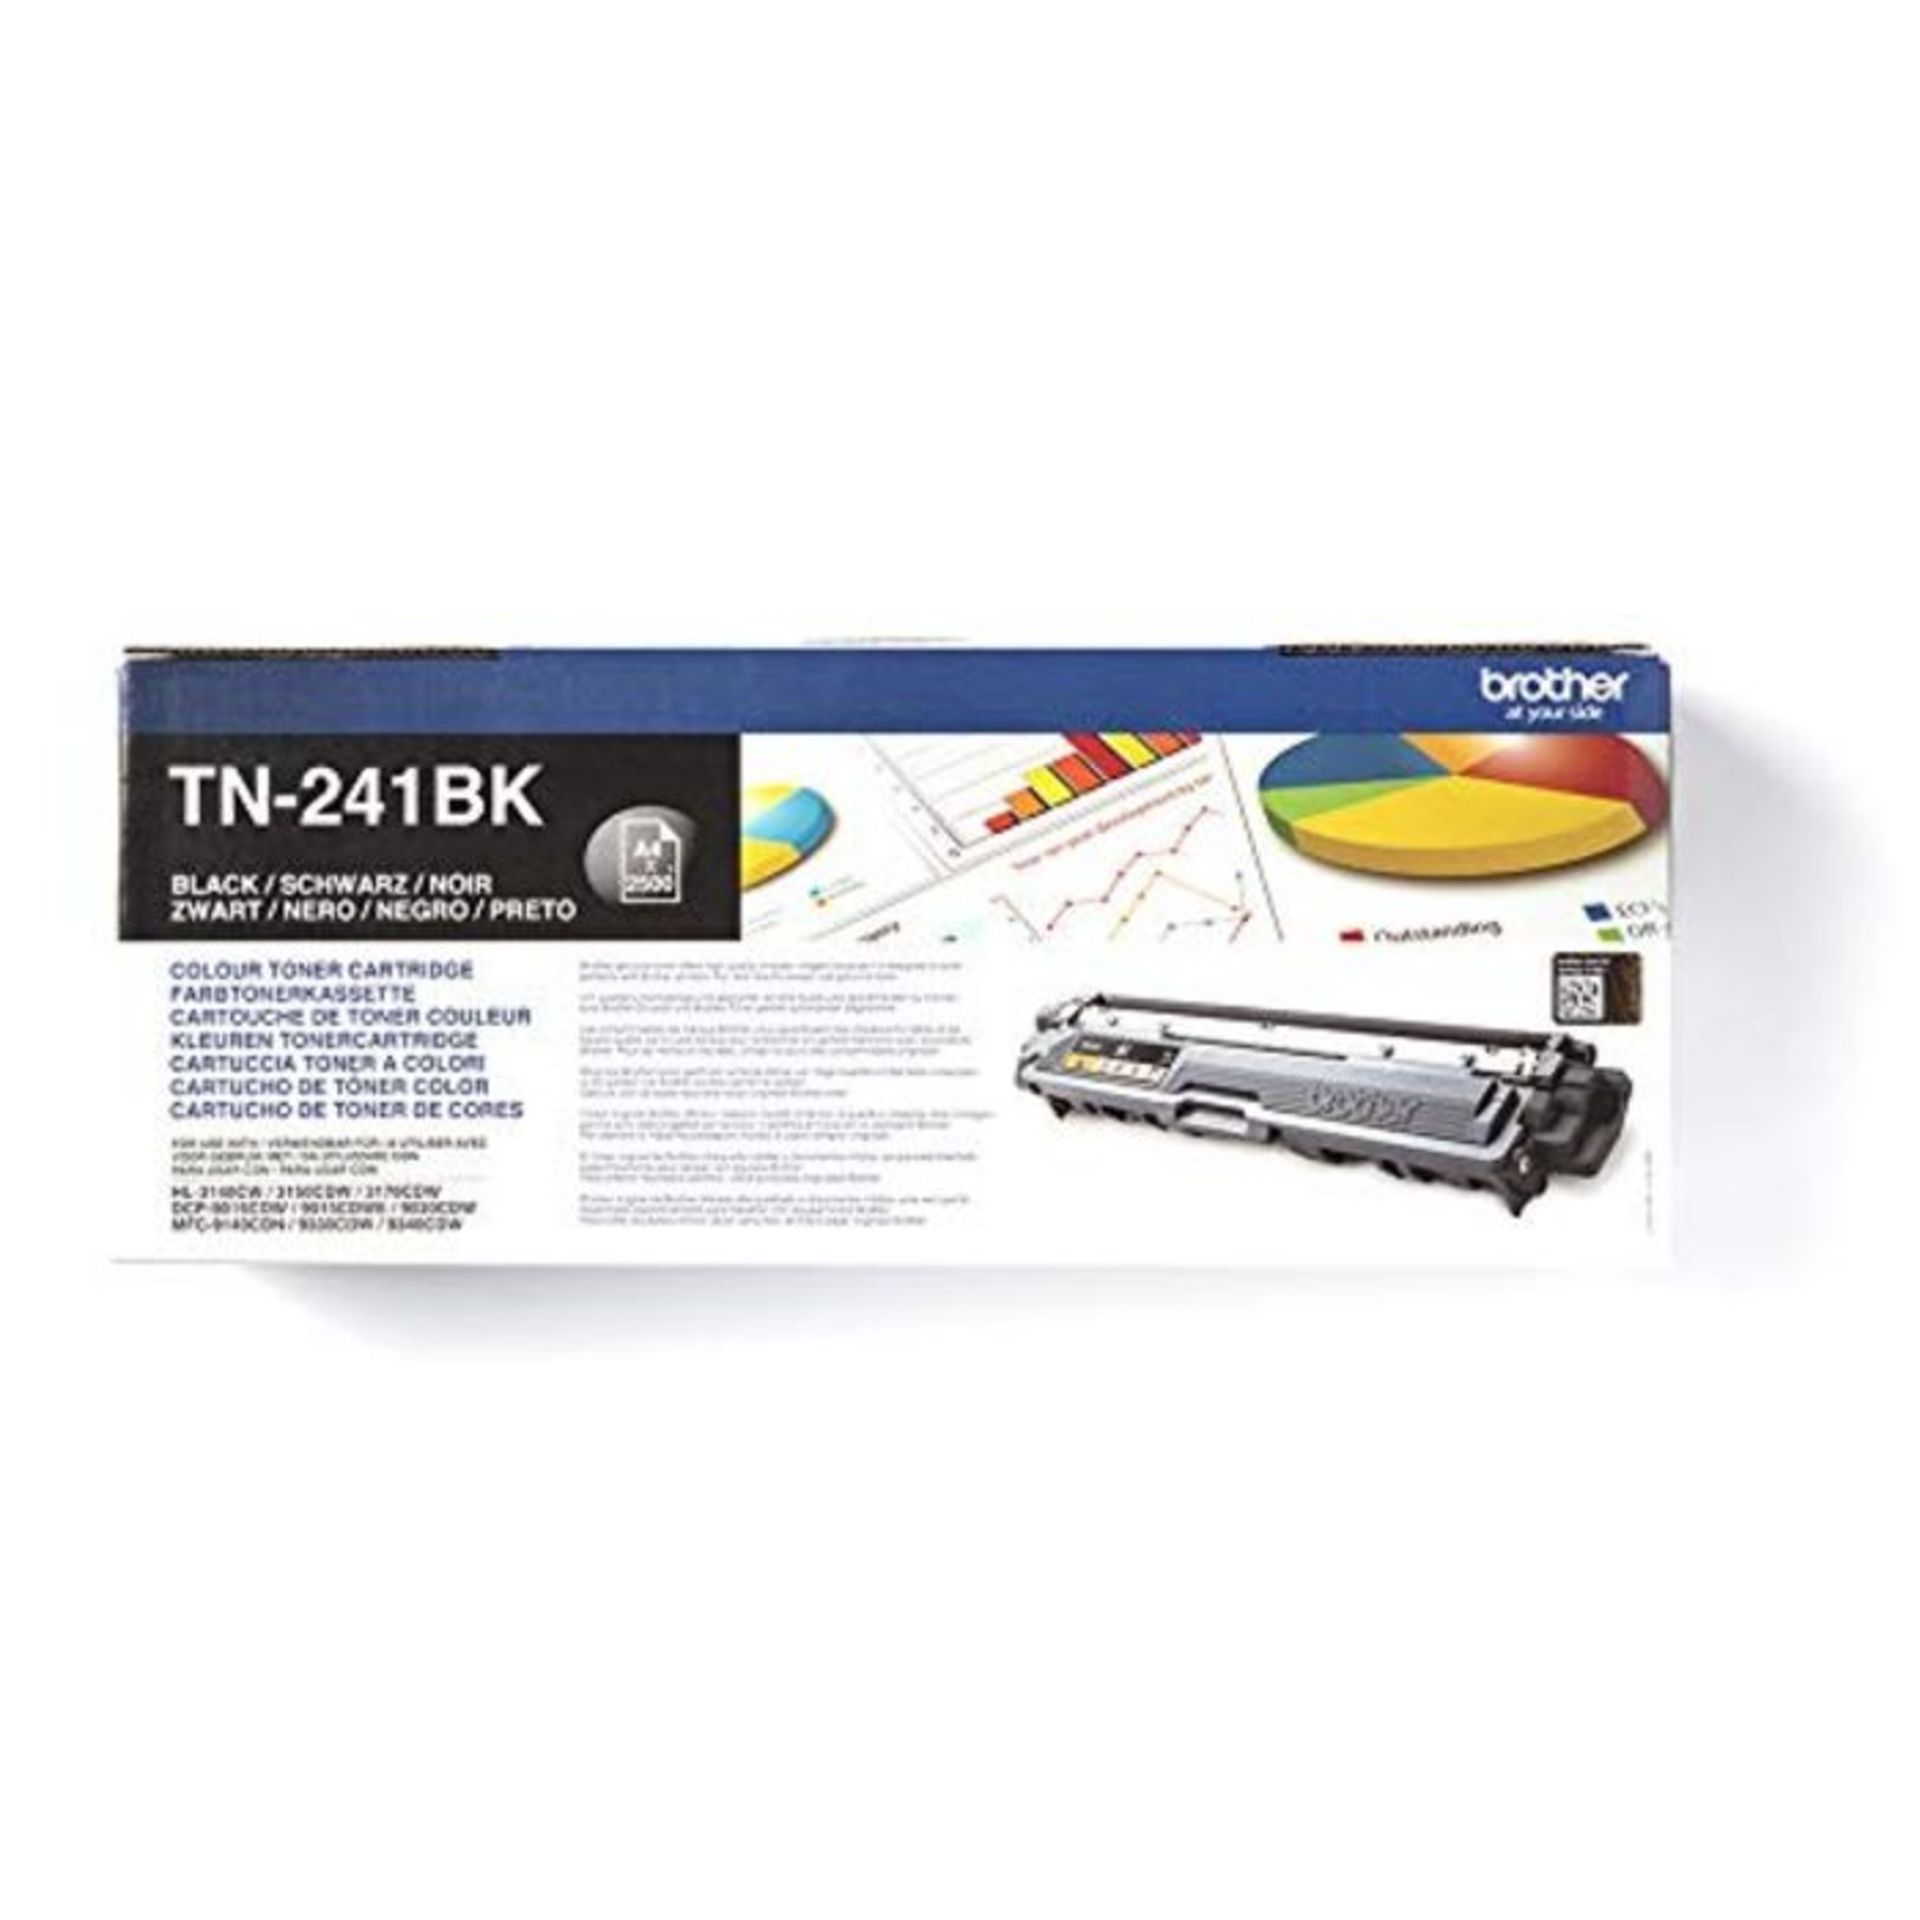 RRP £52.00 Brother TN-241BK Toner Cartridge, Black, Single Pack, Standard Yield, Includes 1 x Ton